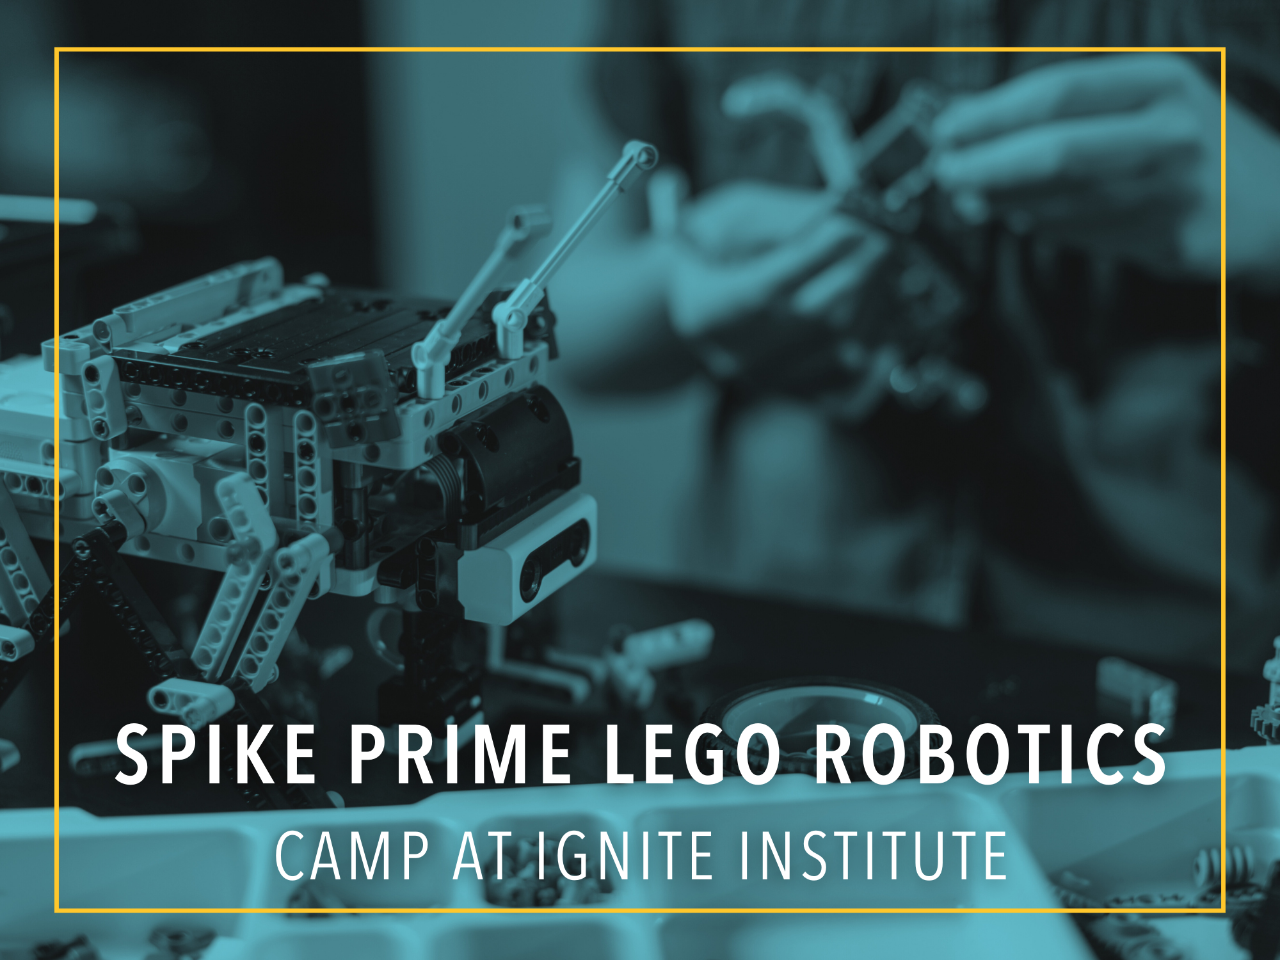 LEGO robotics creation and supplies